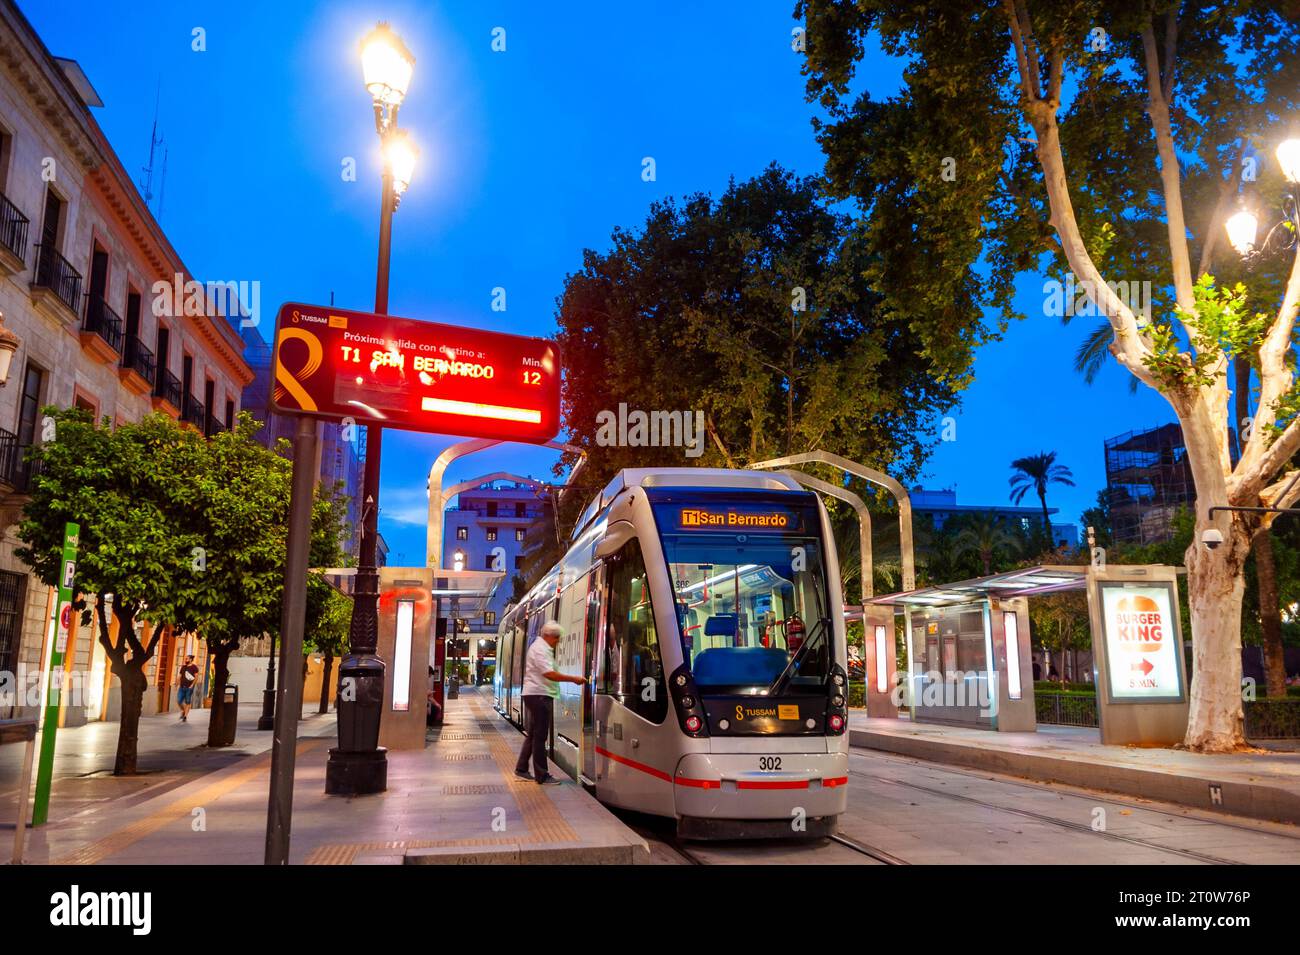 Seville, Spain, People, Public Transport, Tram, at Night, Lights, San Bernardo Station, Street Scene, neighborhoods Stock Photo